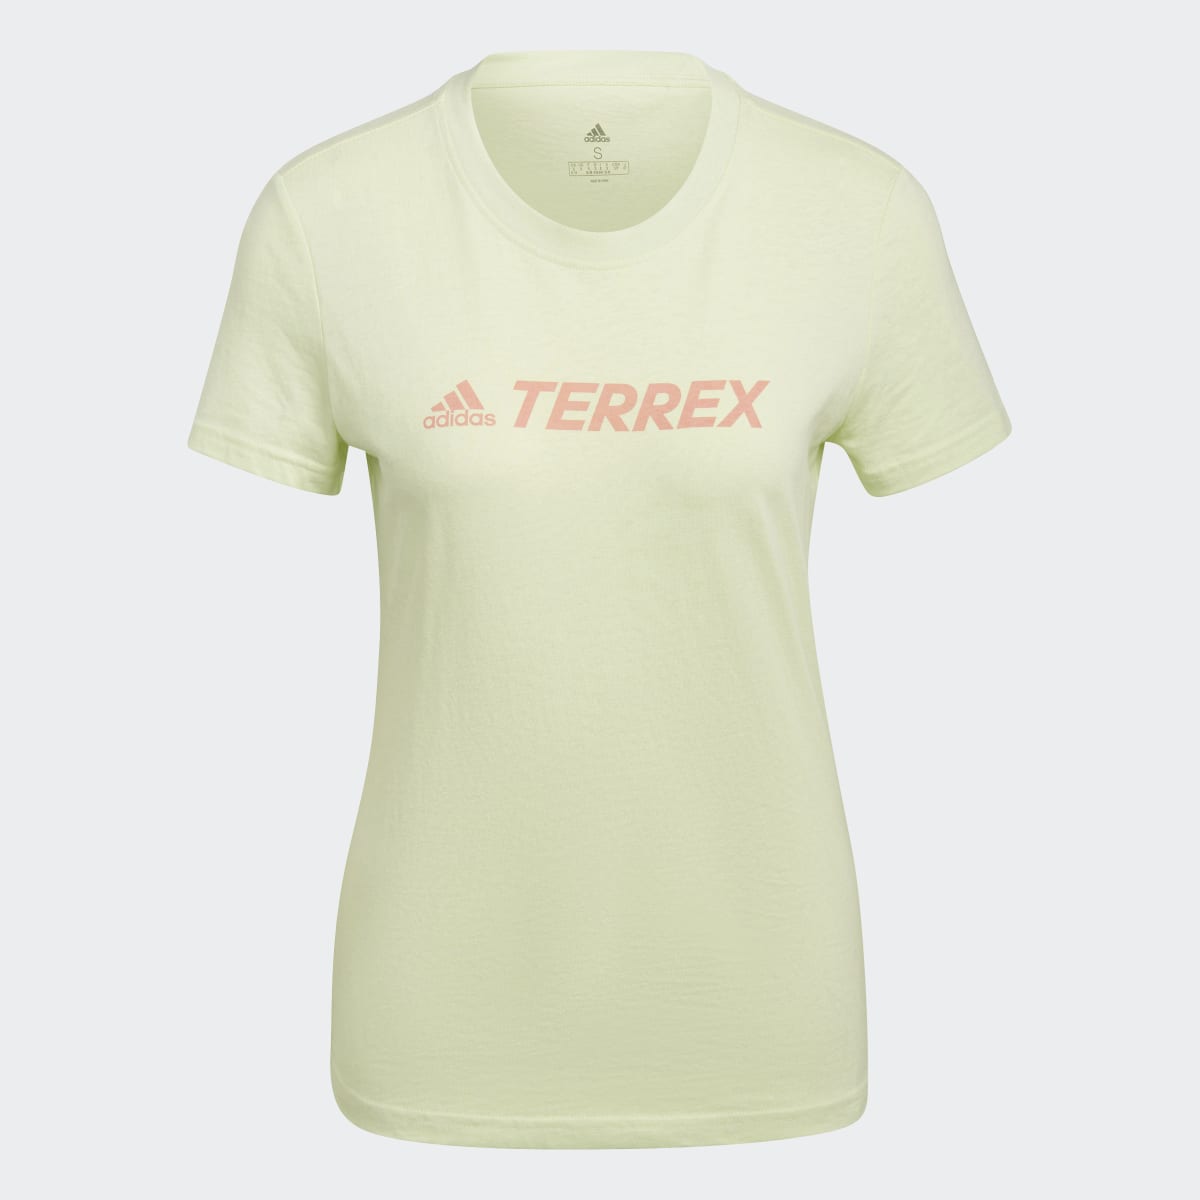 Adidas Playera Terrex Classic Logo. 5